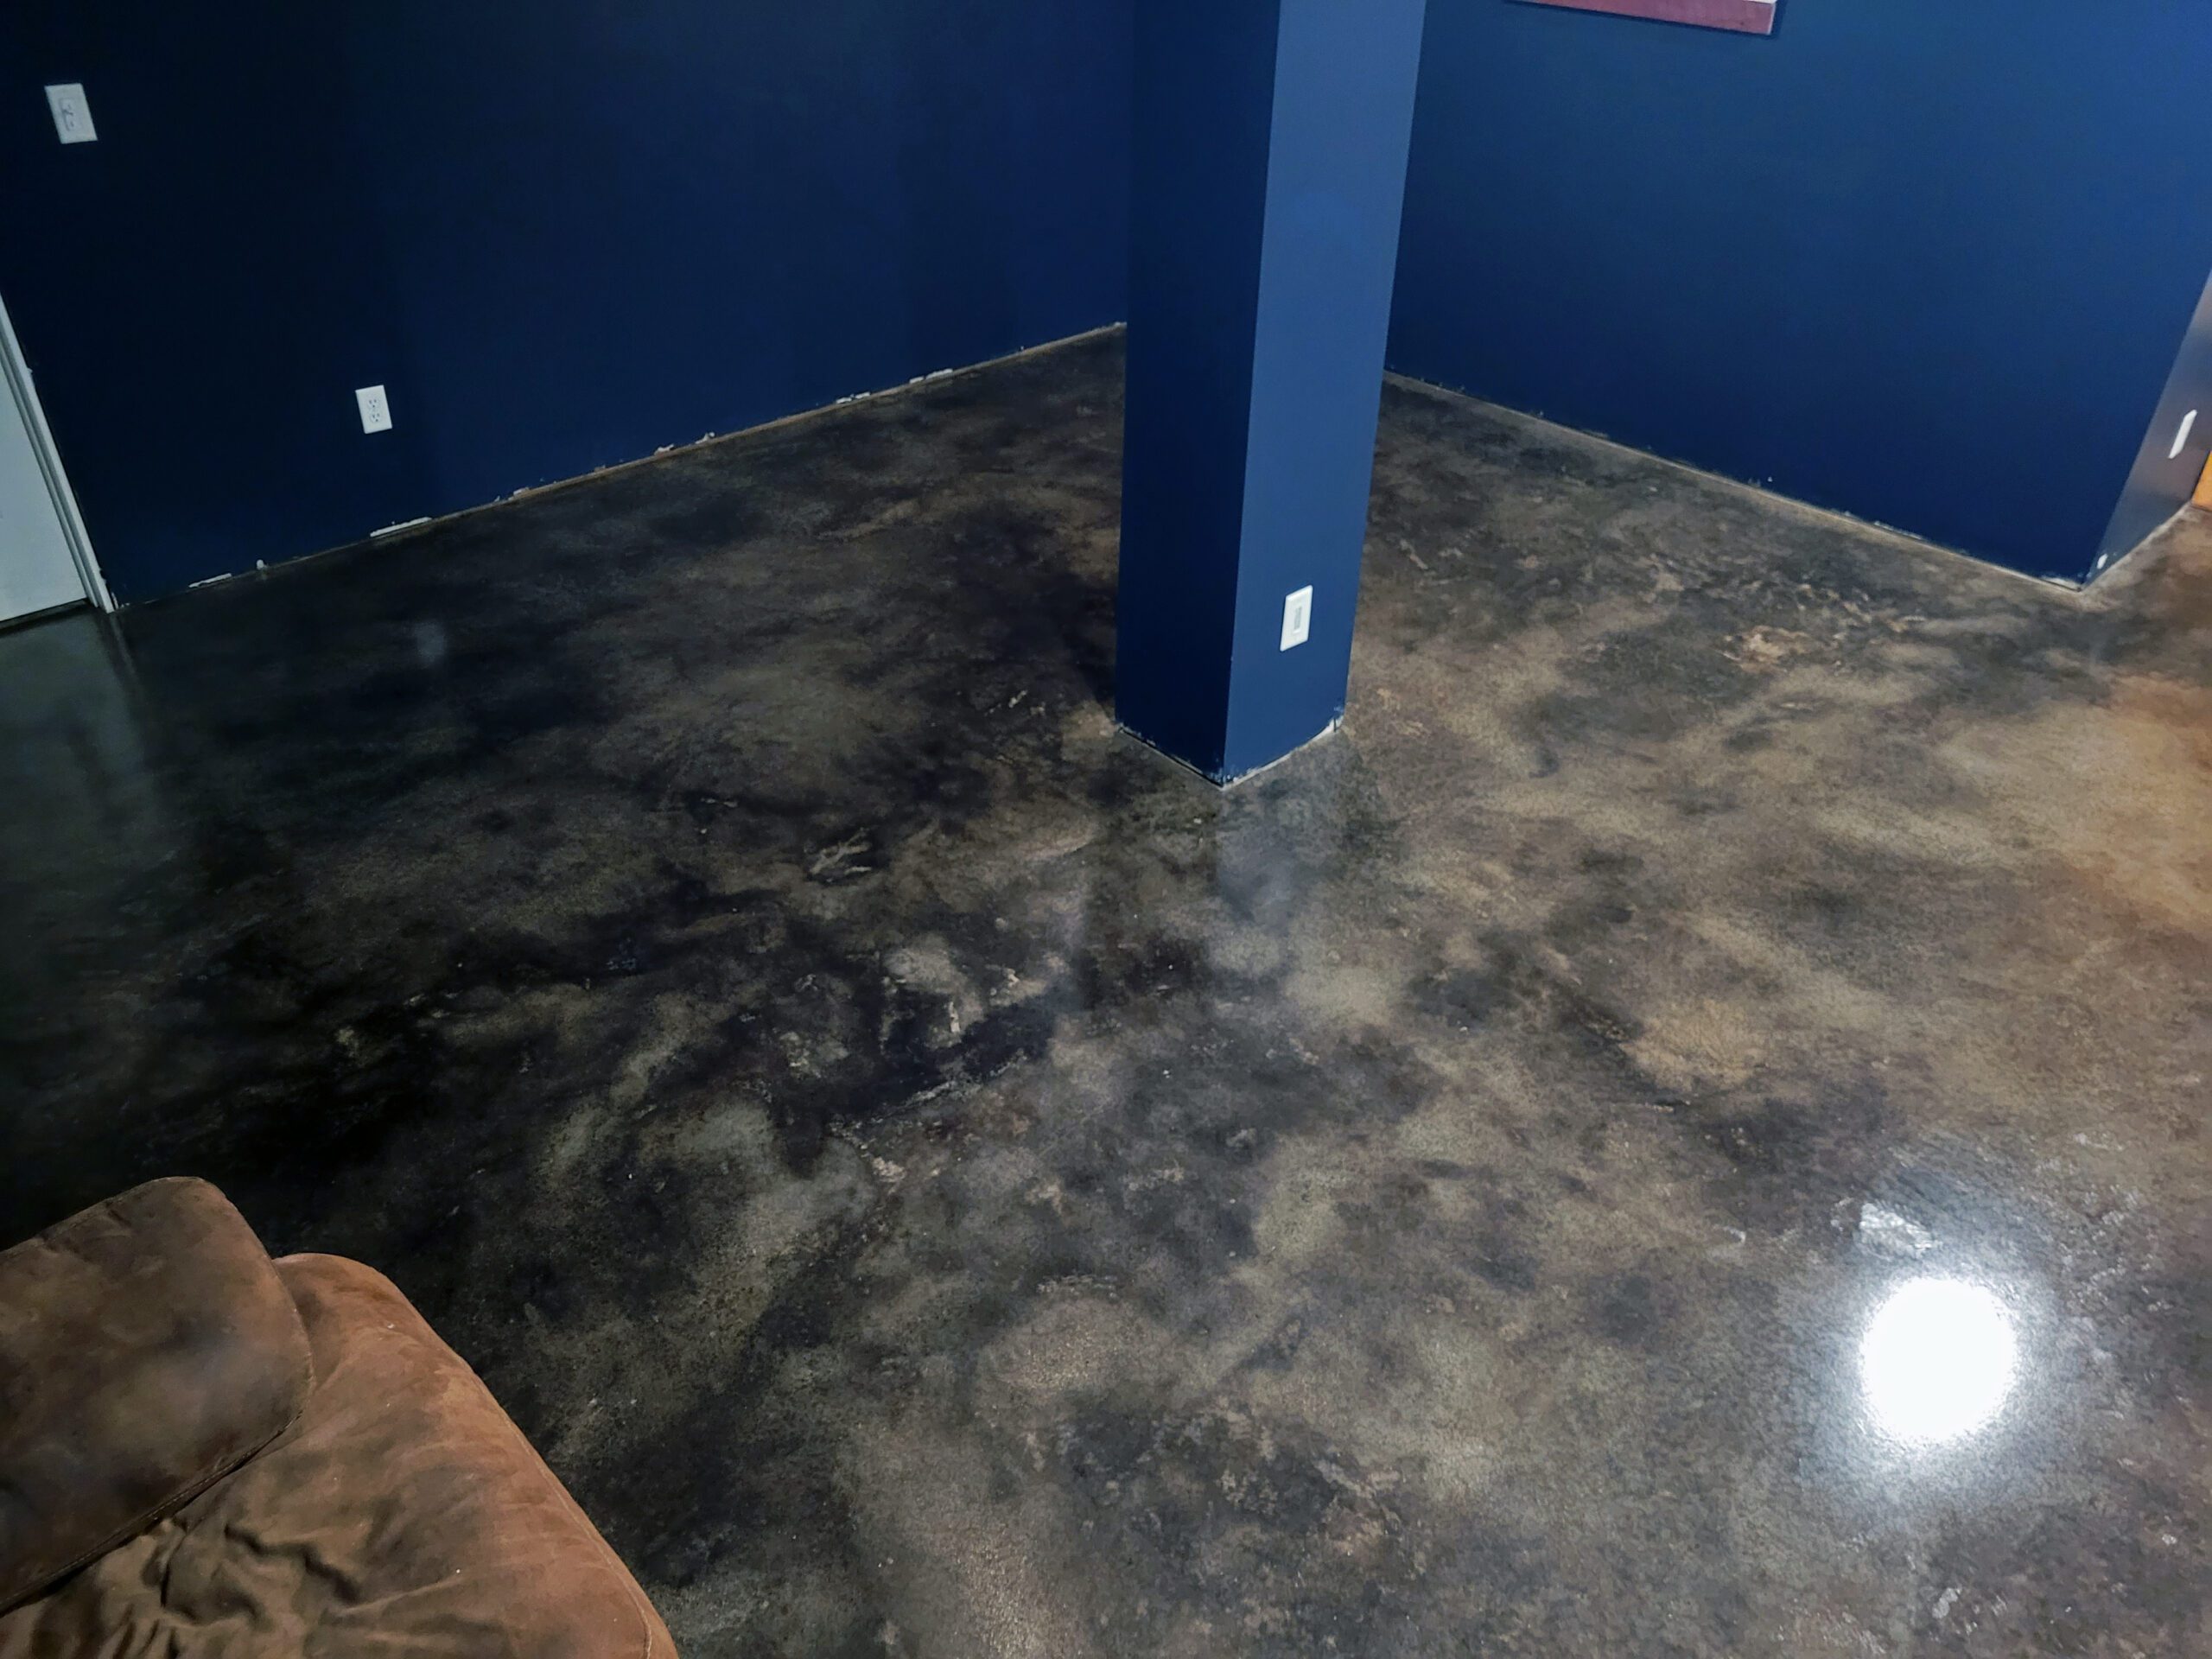 Black acid stained concrete floor